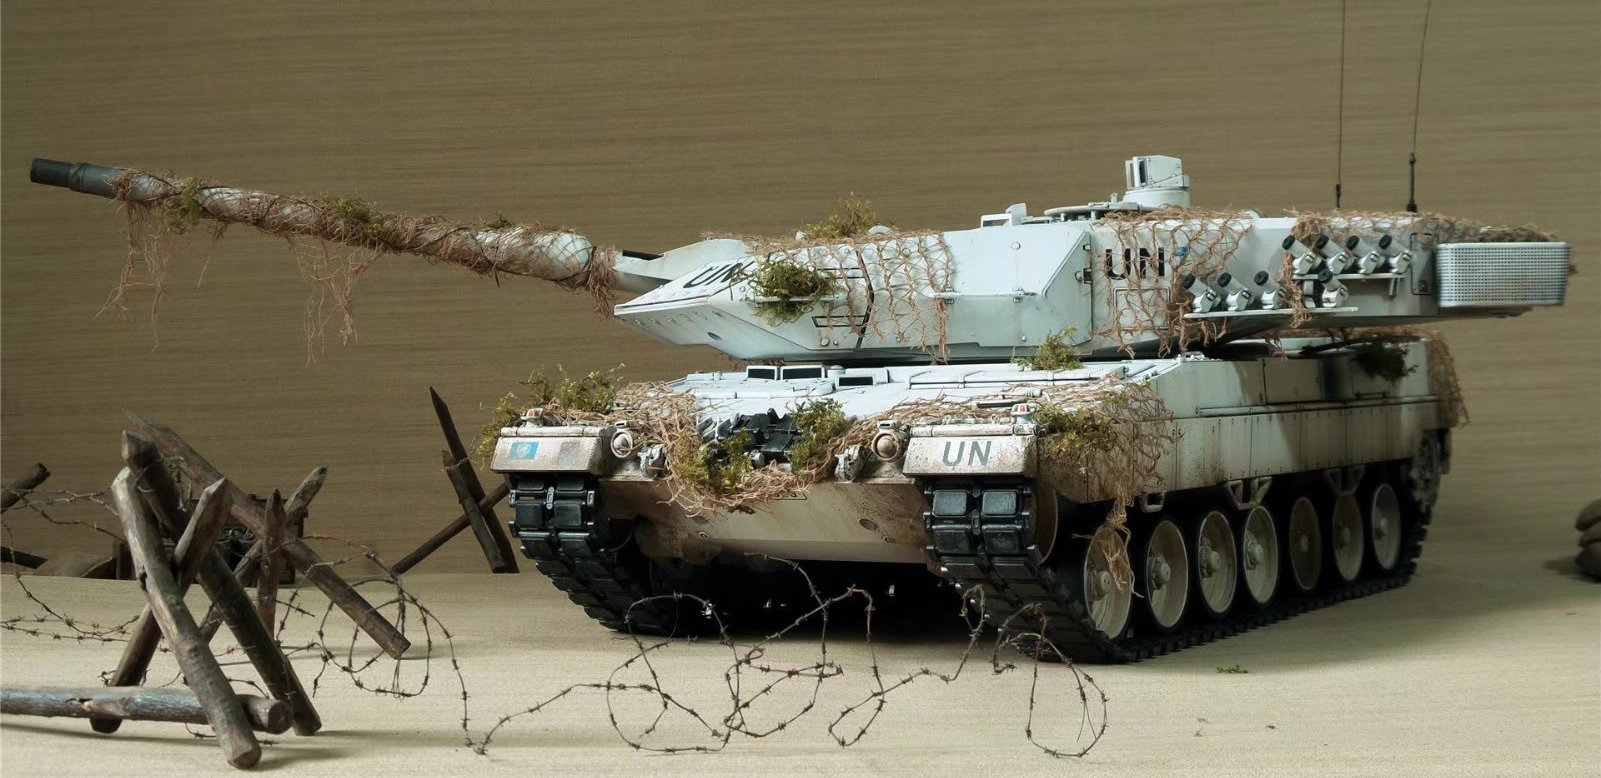 HENG-LONG Remote Control Scale Model Tank 3889 RTR GERMAN leopard 2 A6 Main Battle Tank.